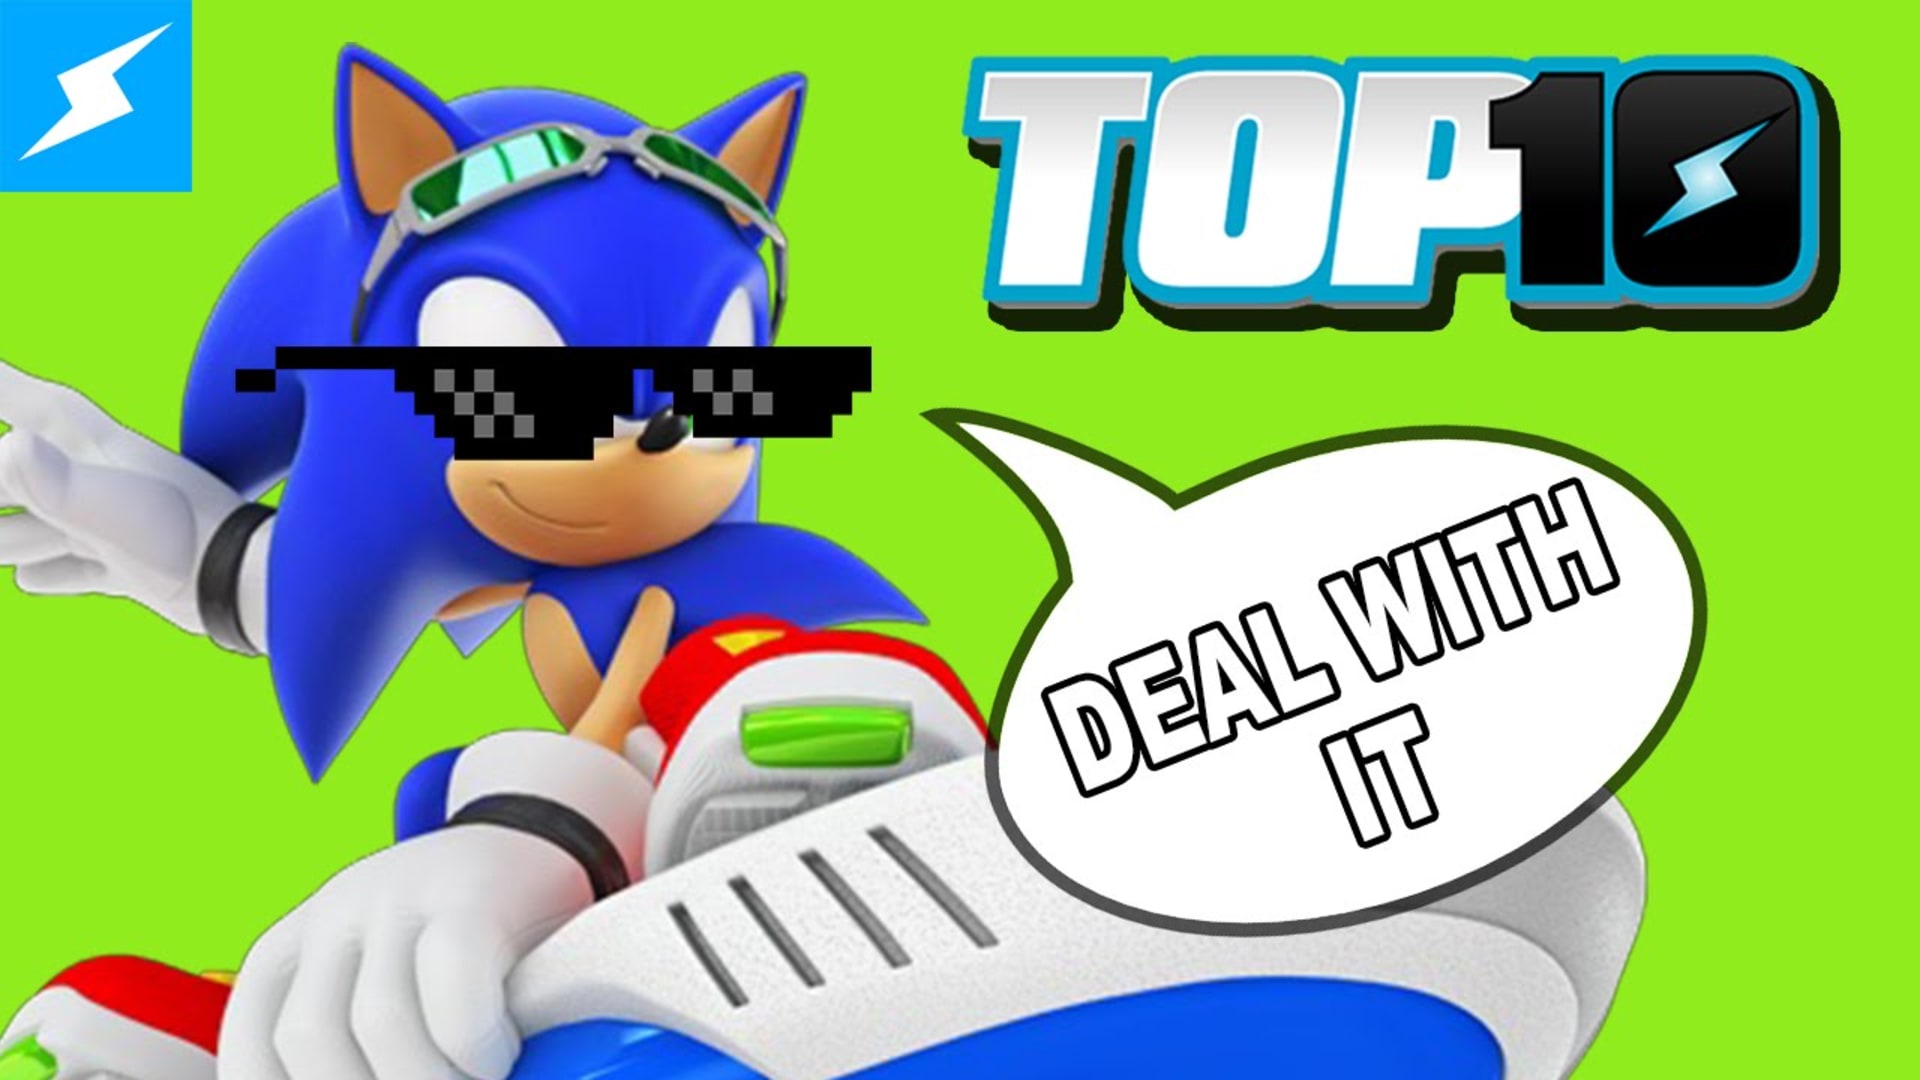 Top 10 Sonics 